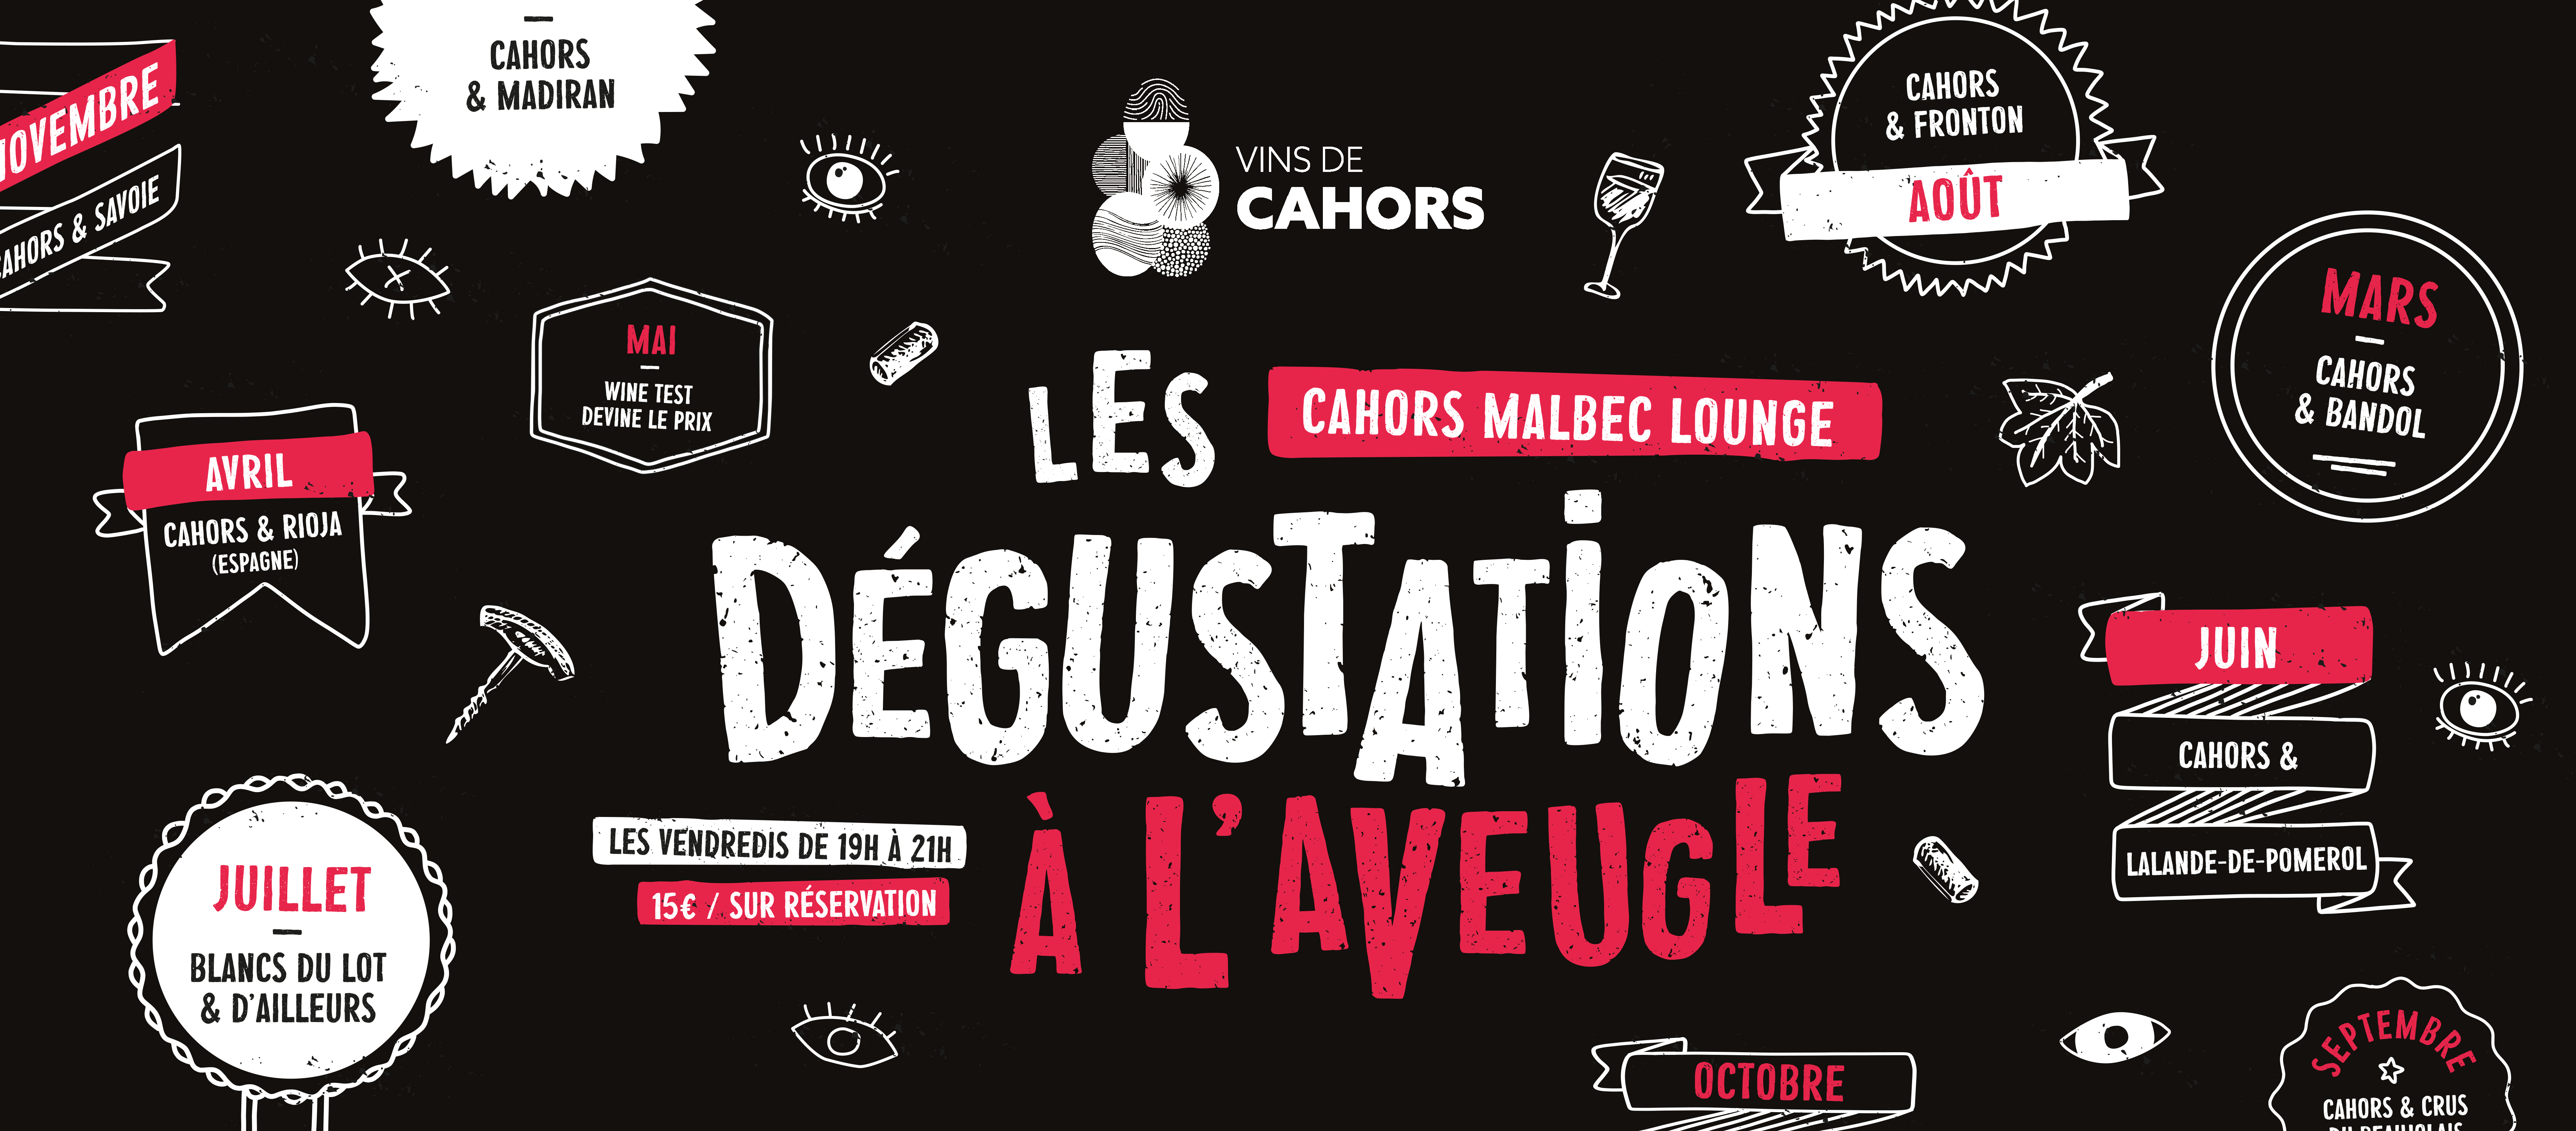 Figeac : Dégustation à l'Aveugle au Cahors Malbec Lounge